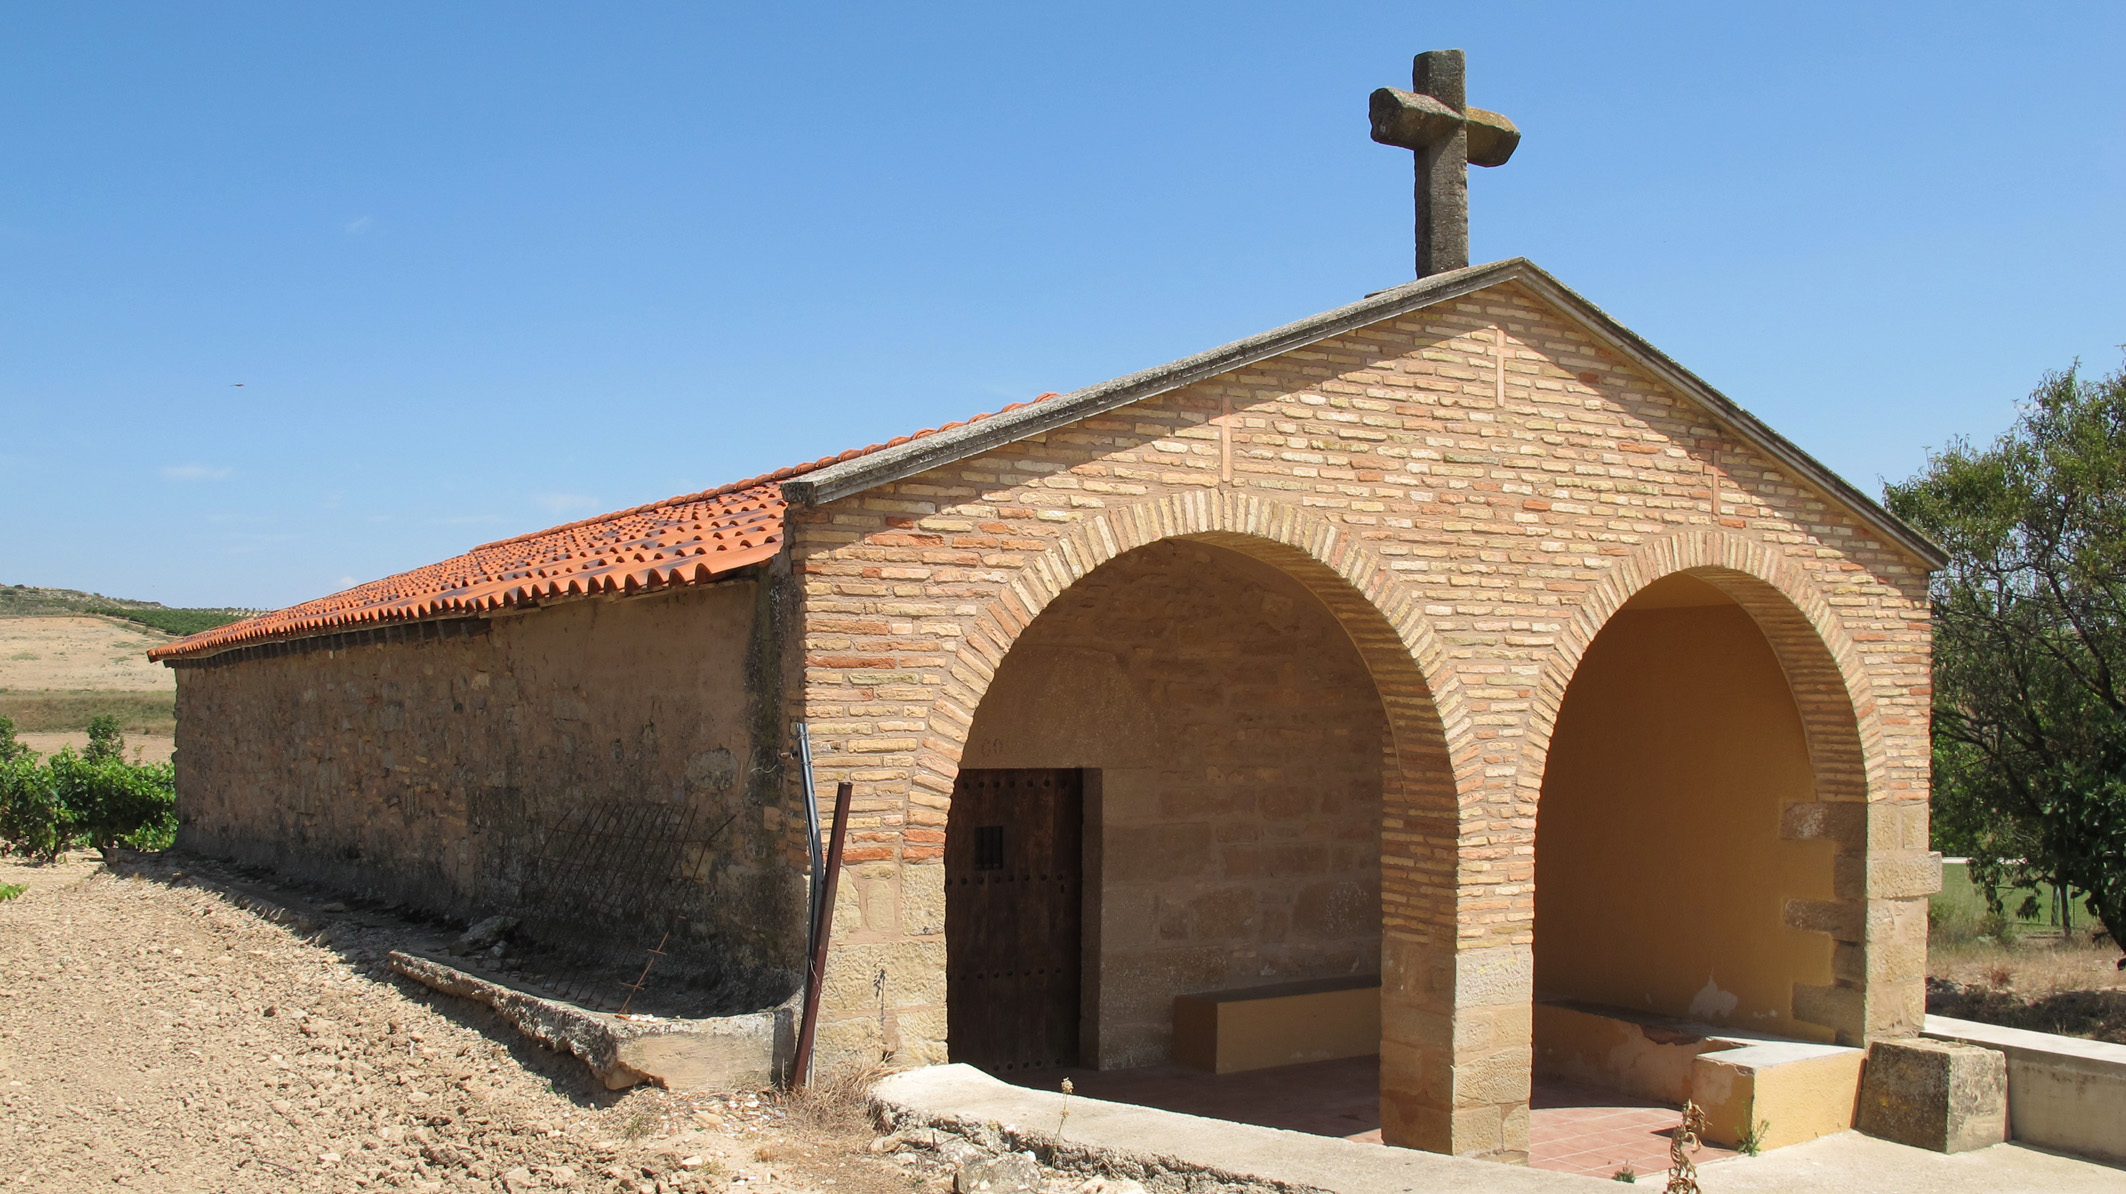 Calvario ermita, Viana